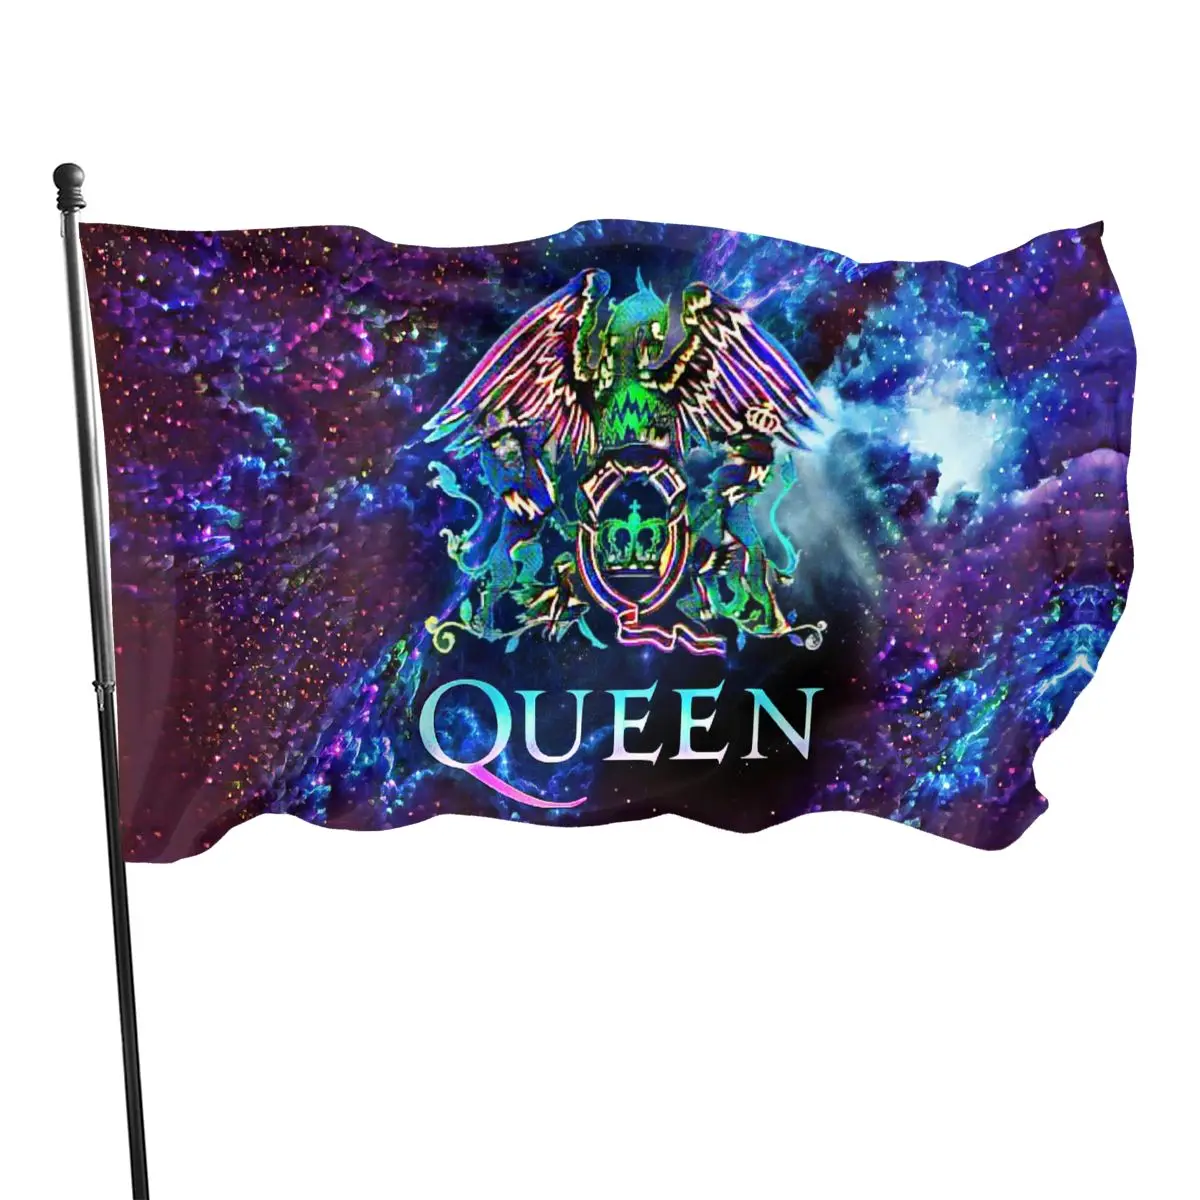 90x150cm  Queen Rock Band flag